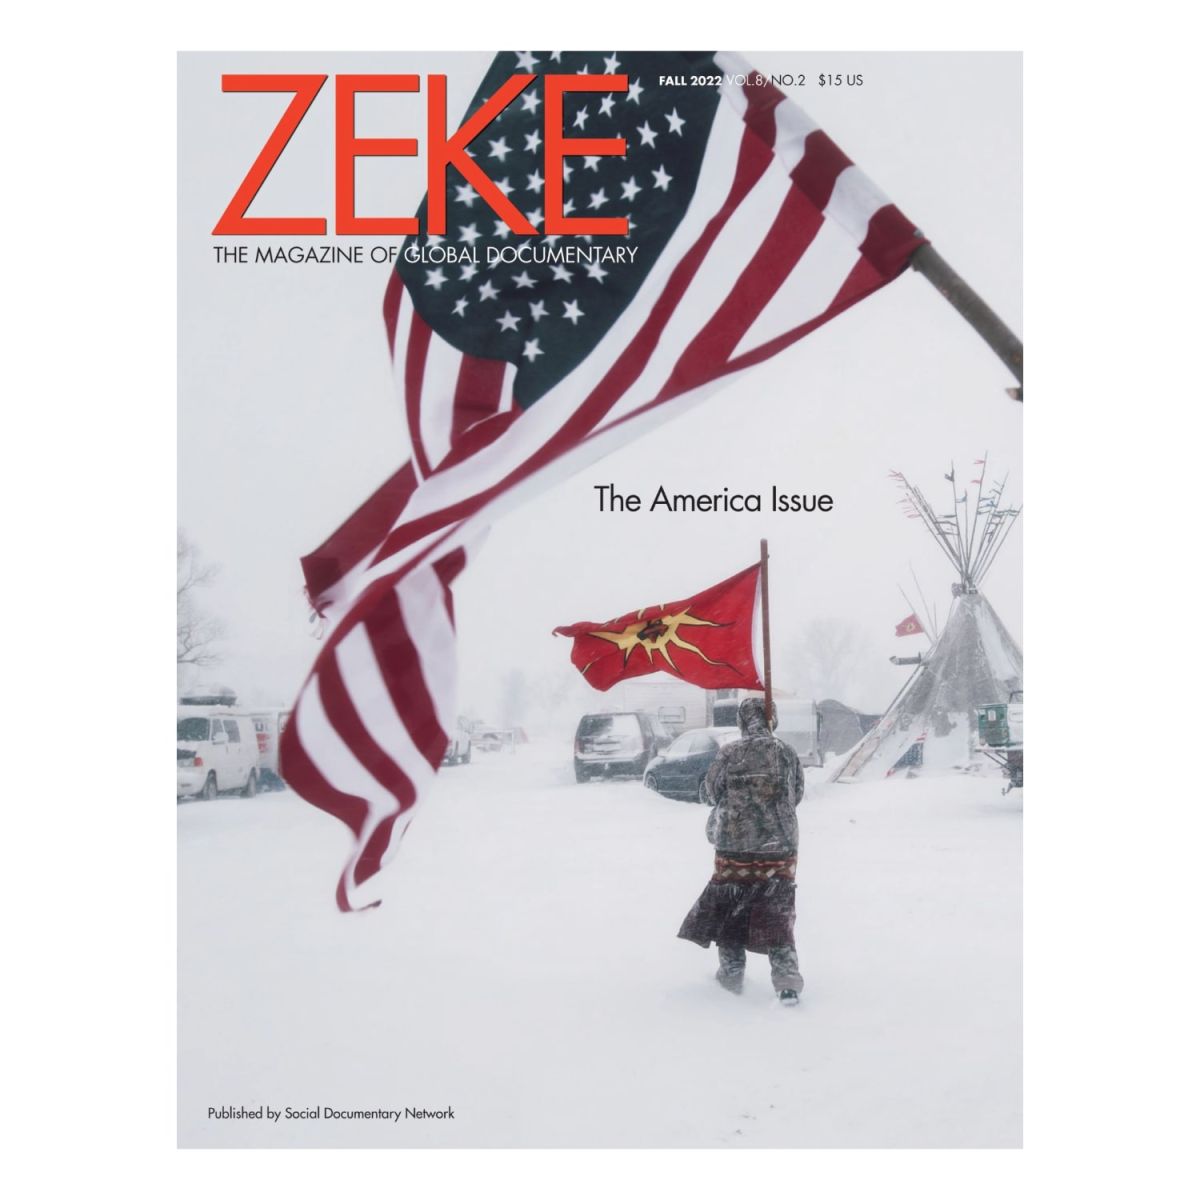 ZEKE The magazine of global documentary - Automne 2022 Vol.8 No.2